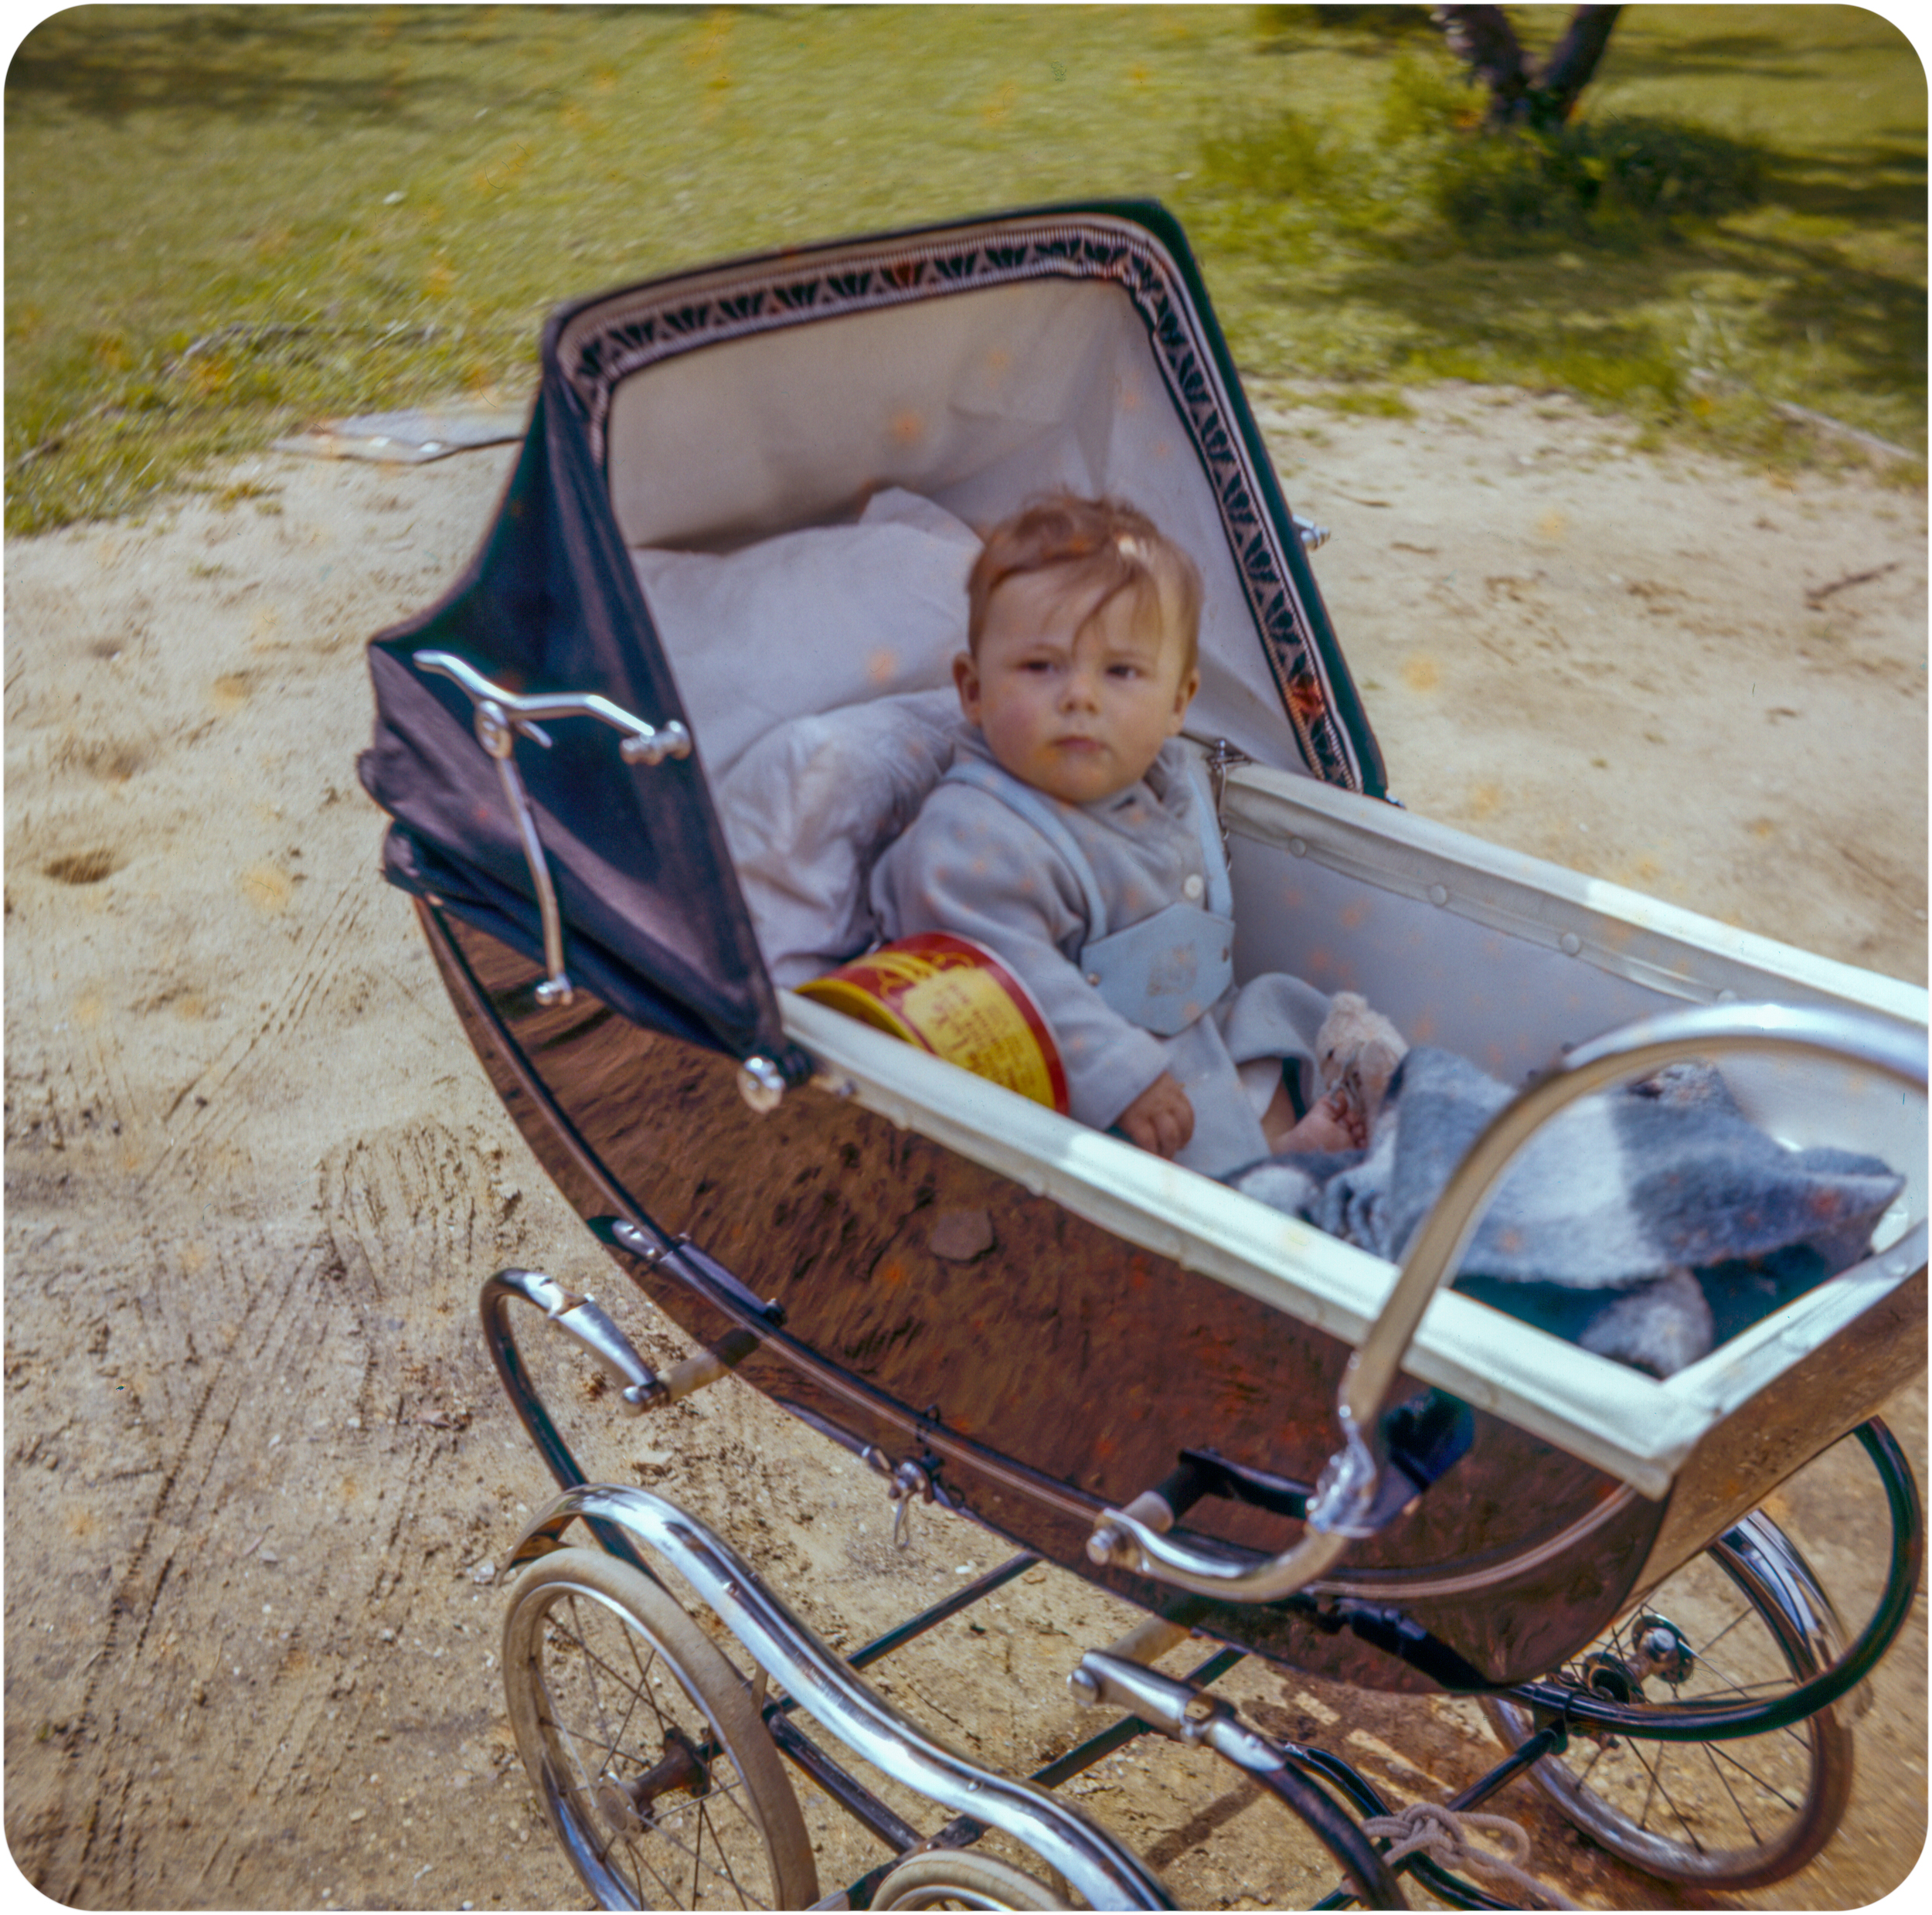 Baby in pram - St. Ives - Circa 1960